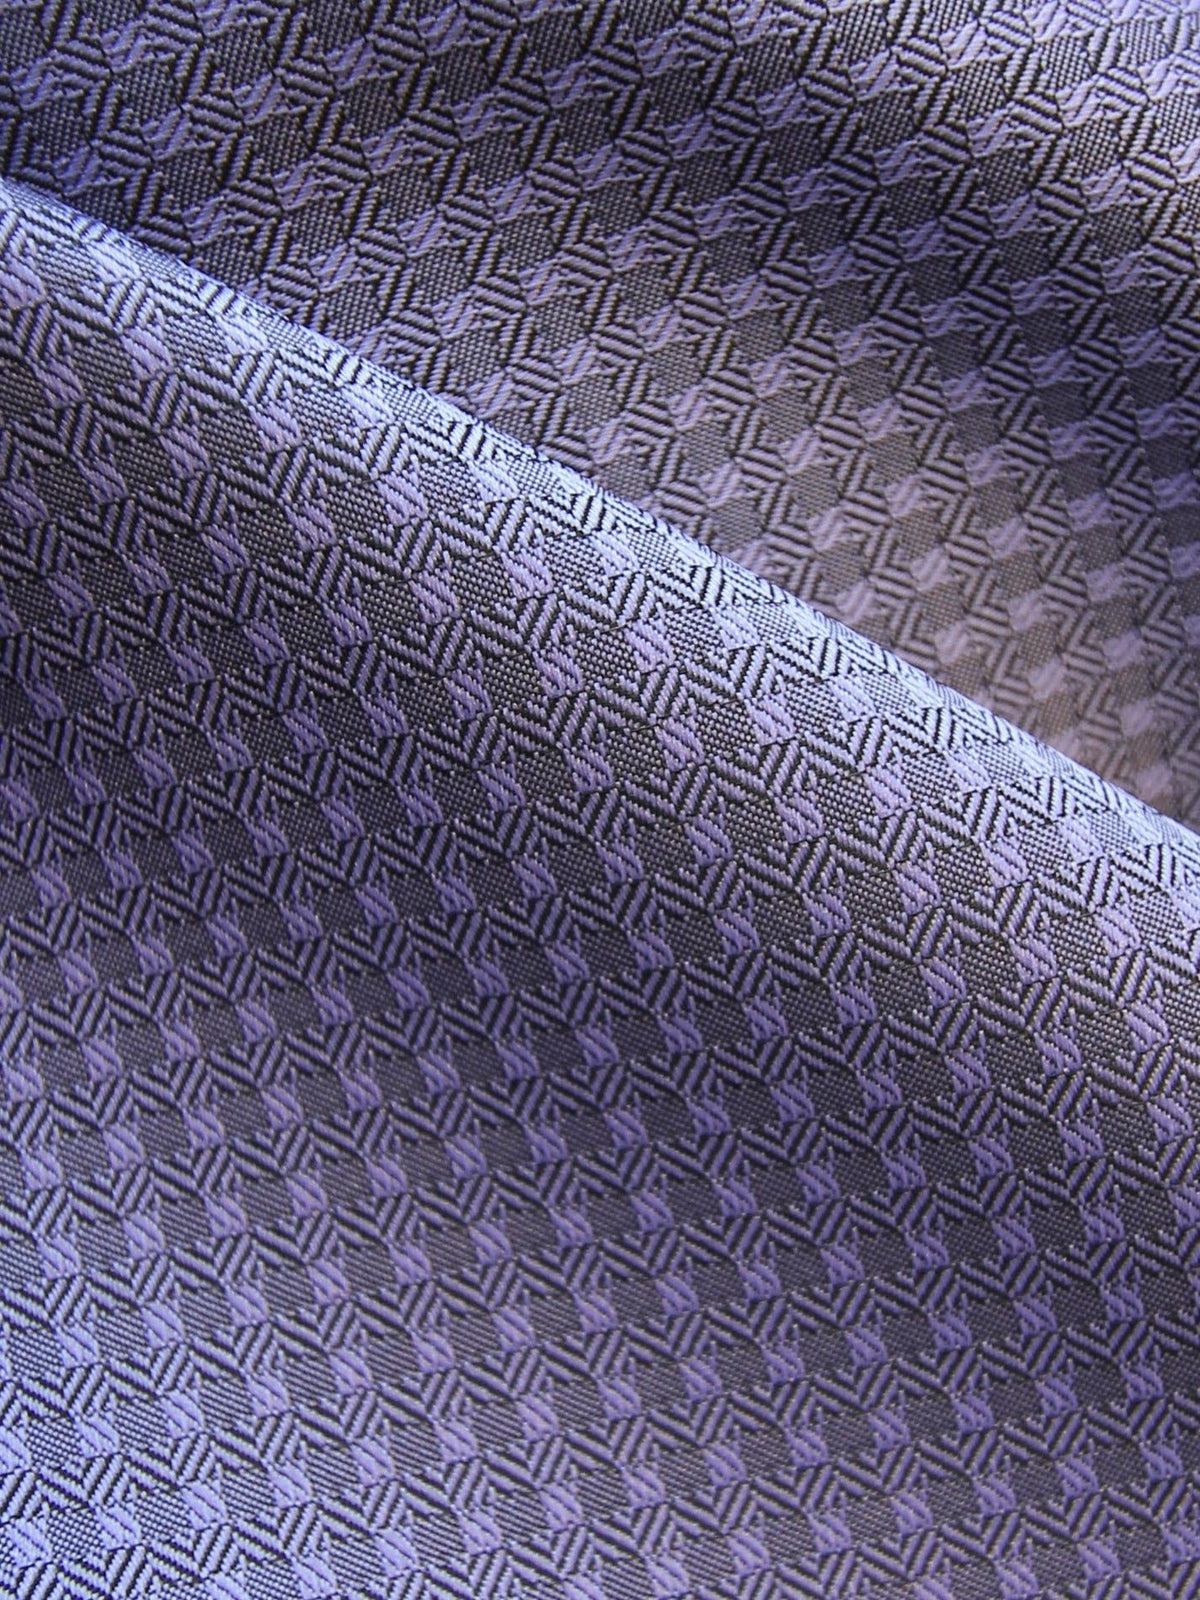 Purple Waistcoat Fabric - Dundee